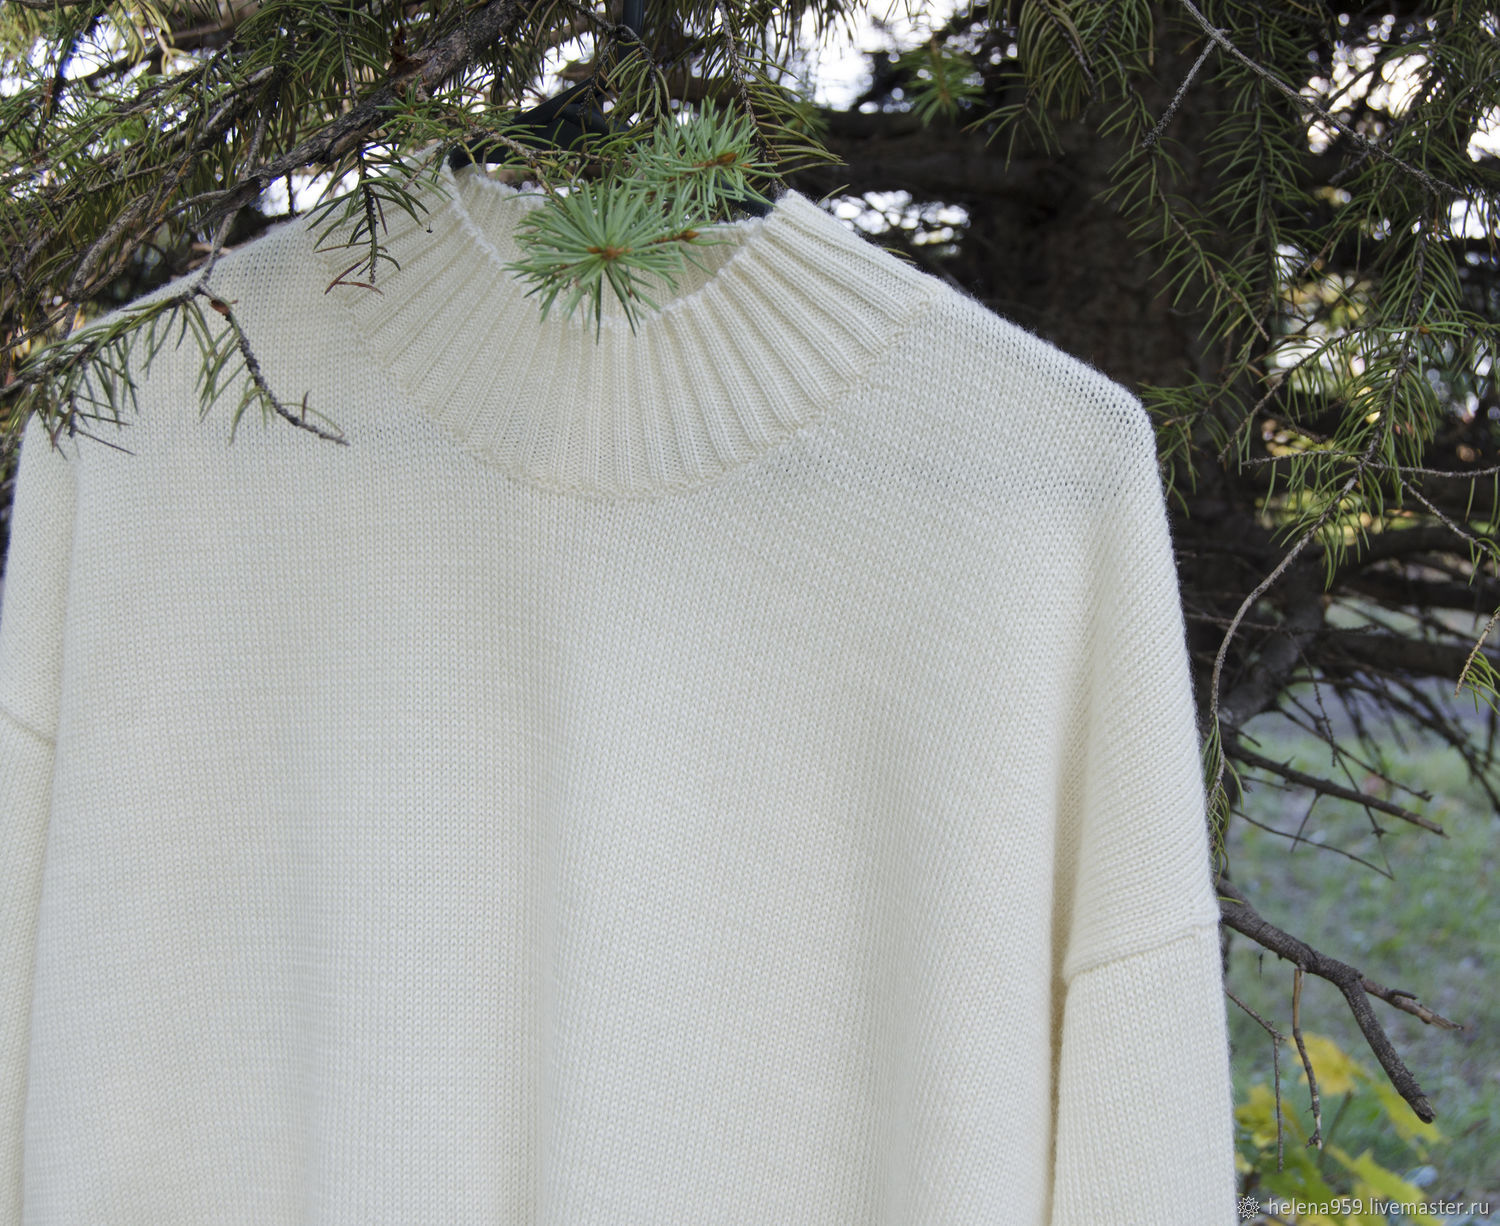 Jerseys: Merino sweater with Japanese shoulder, Sweaters, Ulyanovsk,  Фото №1